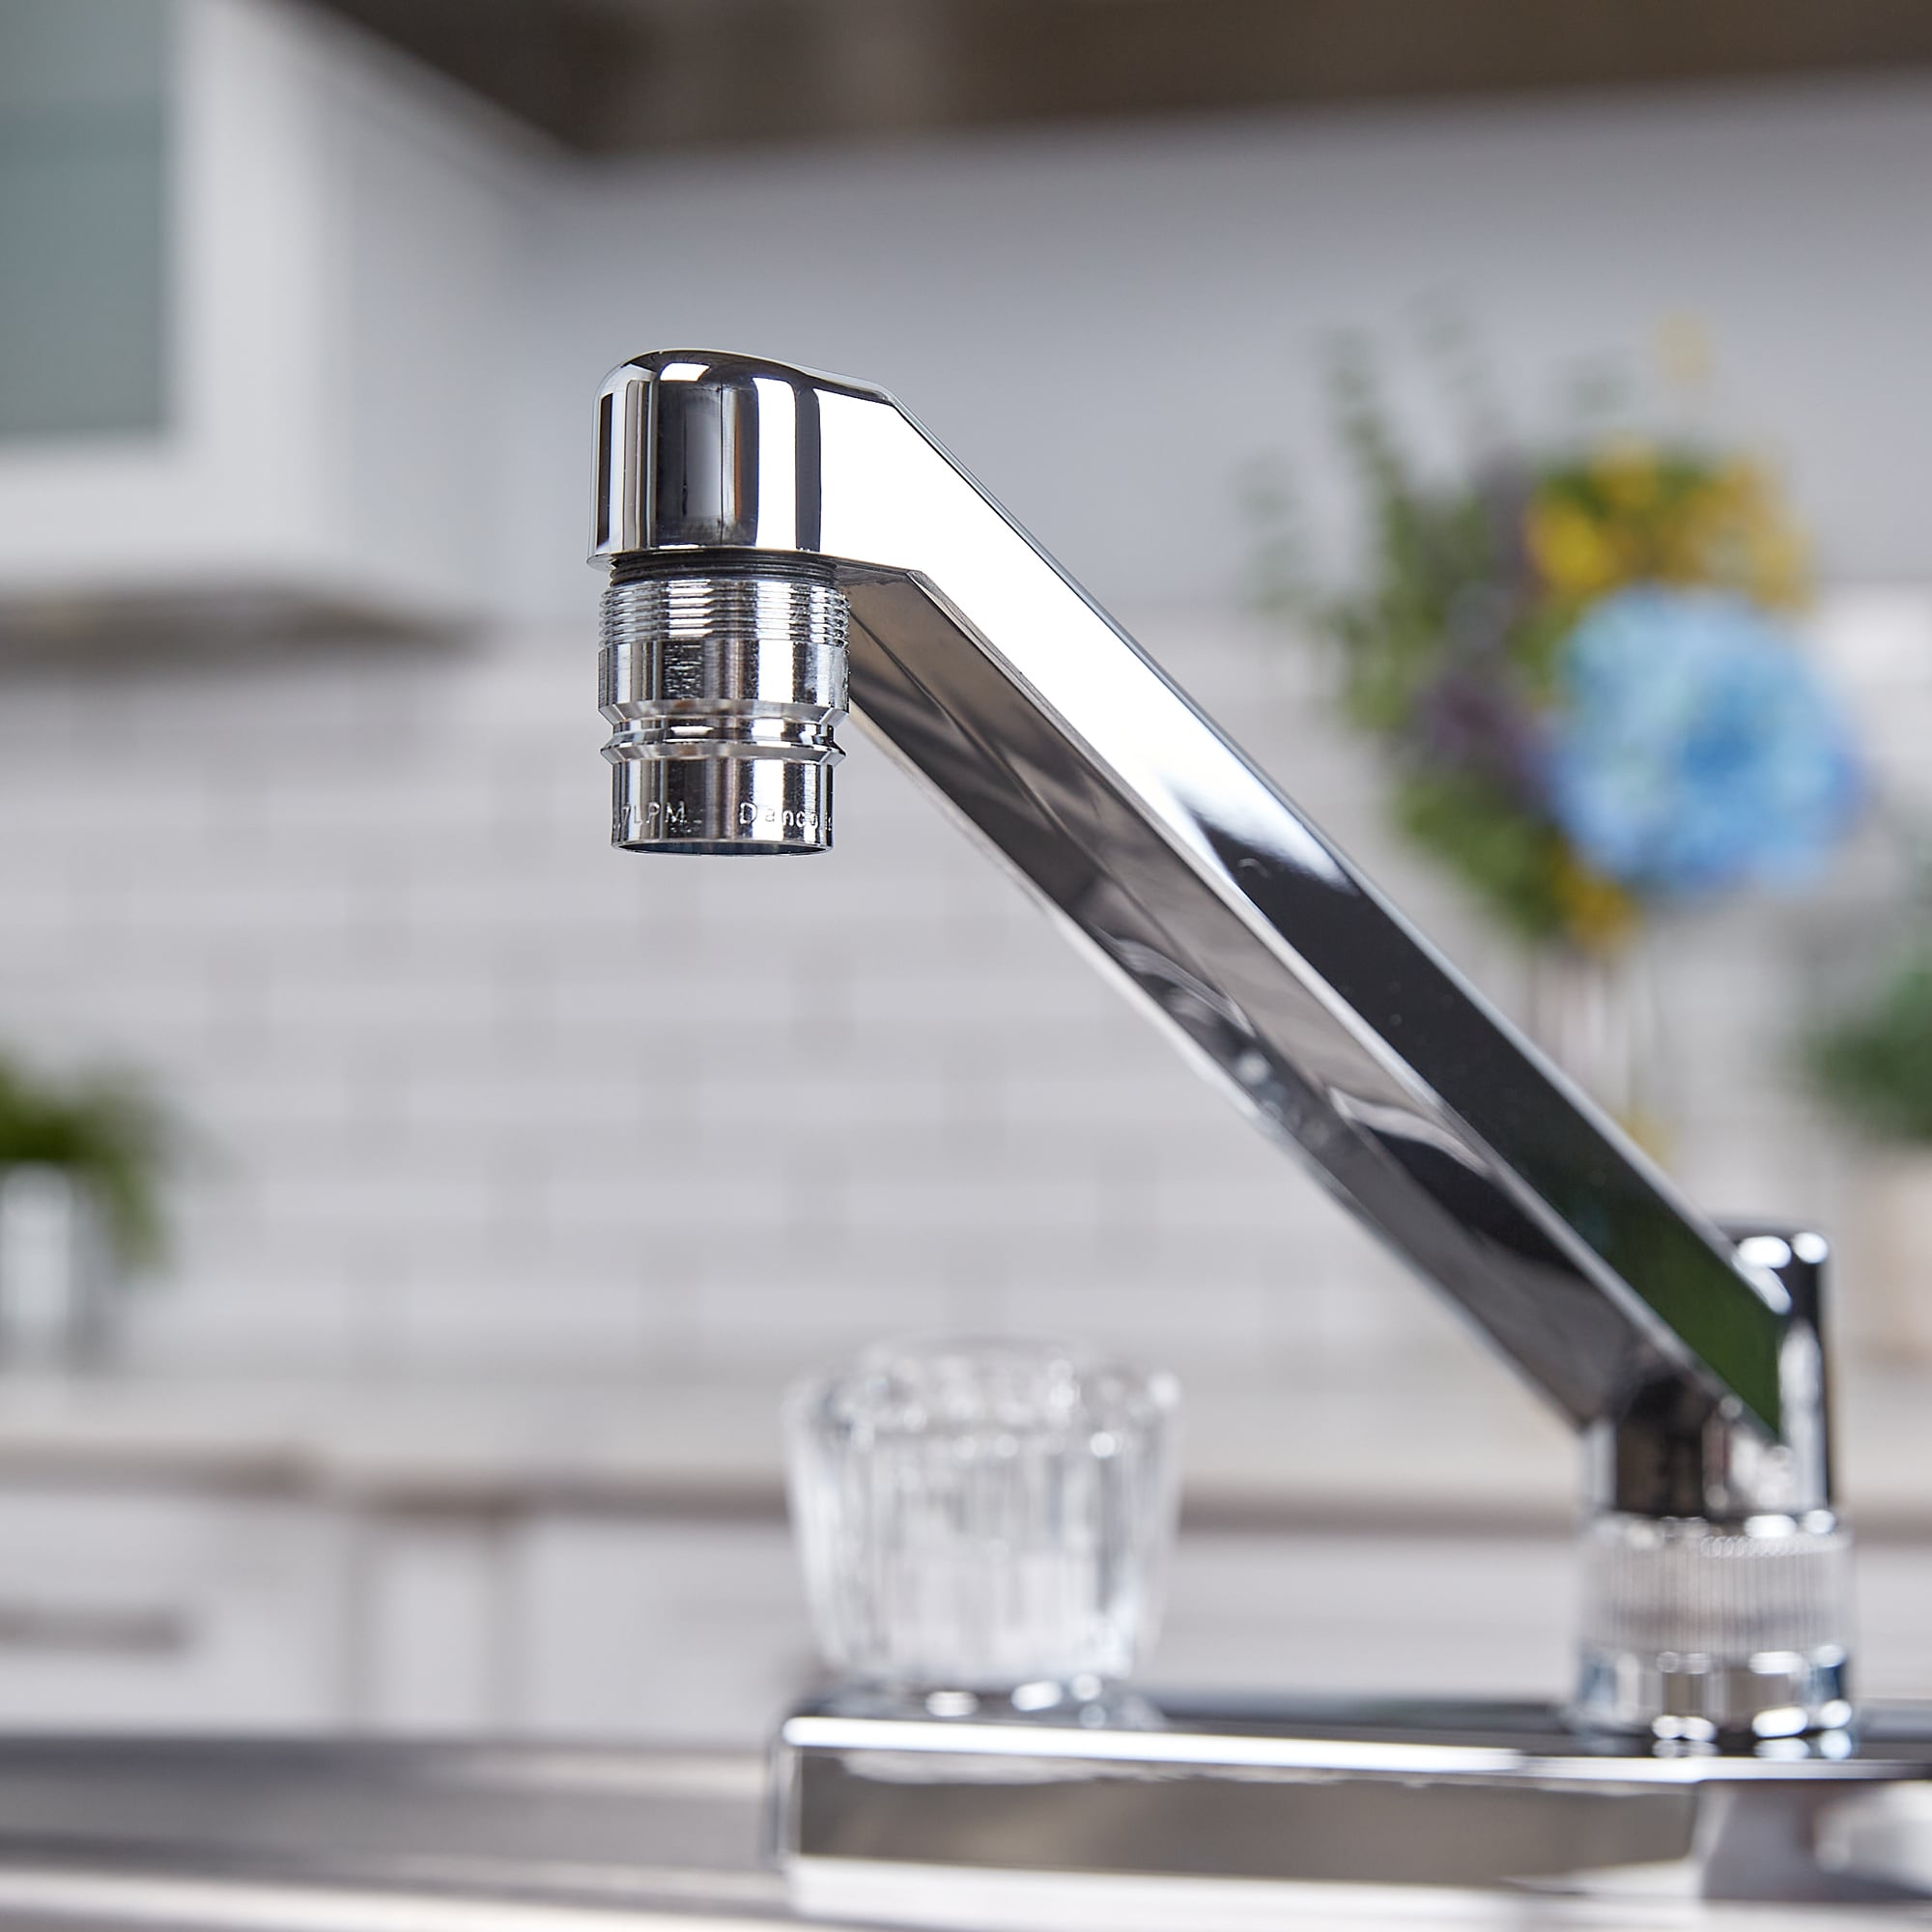 2PCS portable dishwasher faucet adapter Diverter Adapter Kit Sink